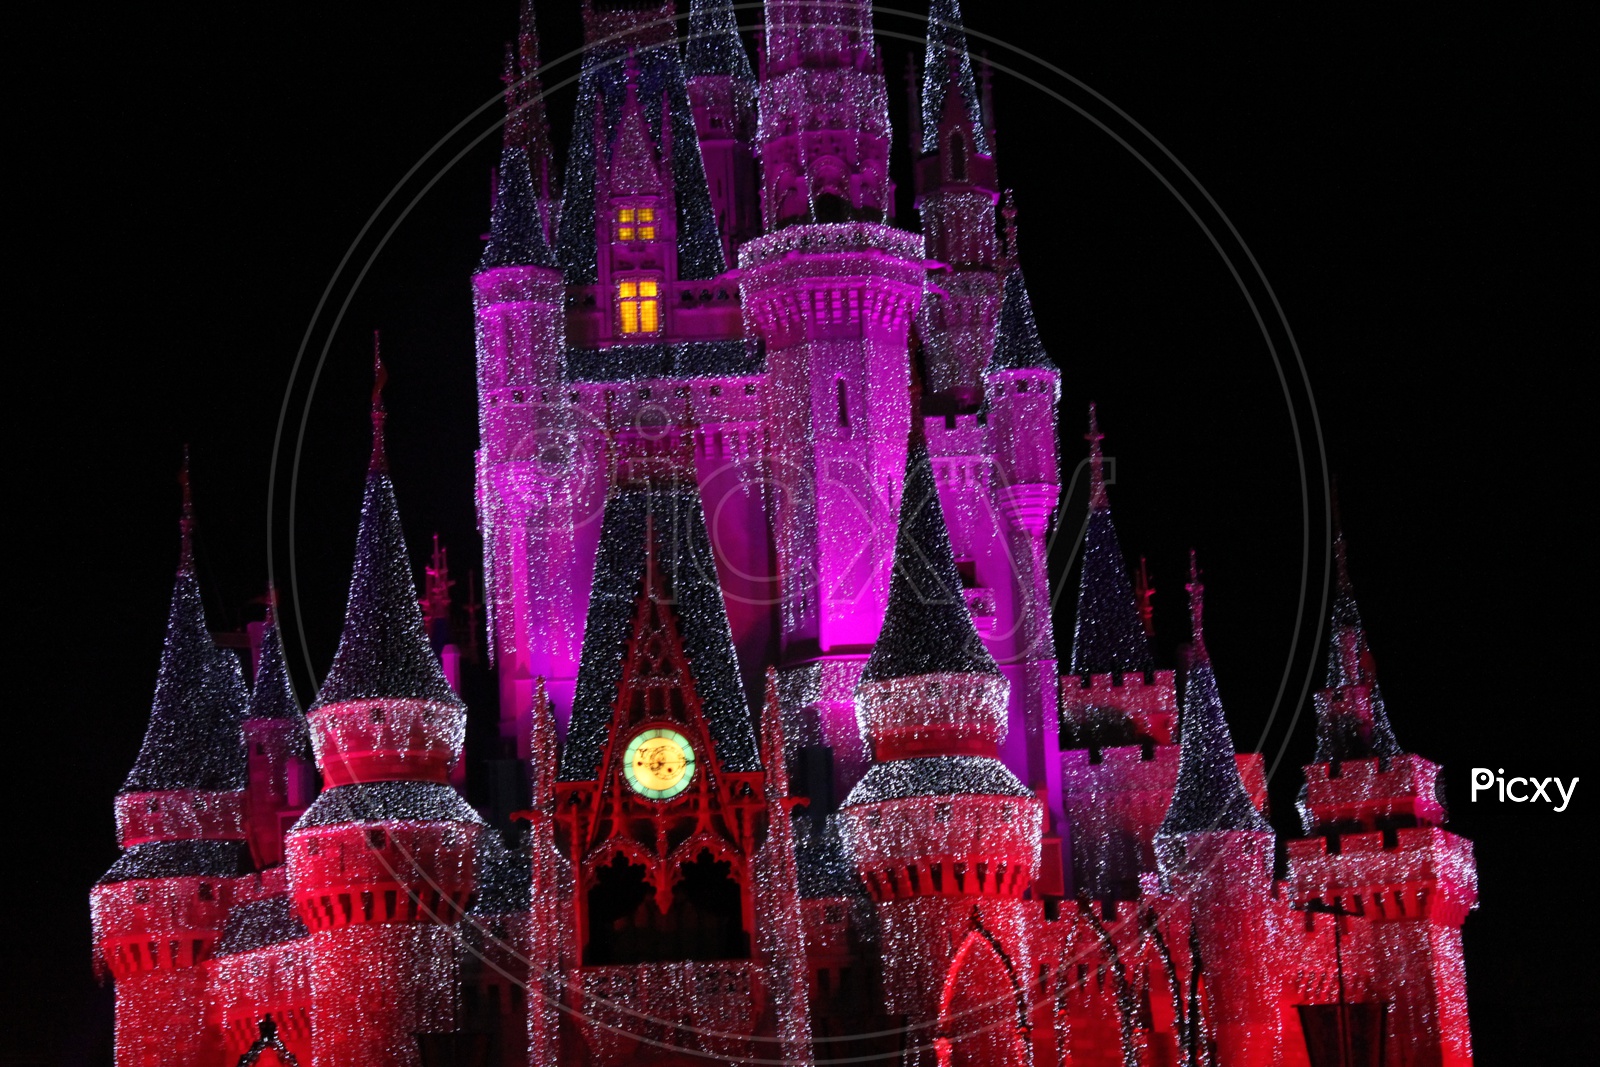 Cinderella Castle during night